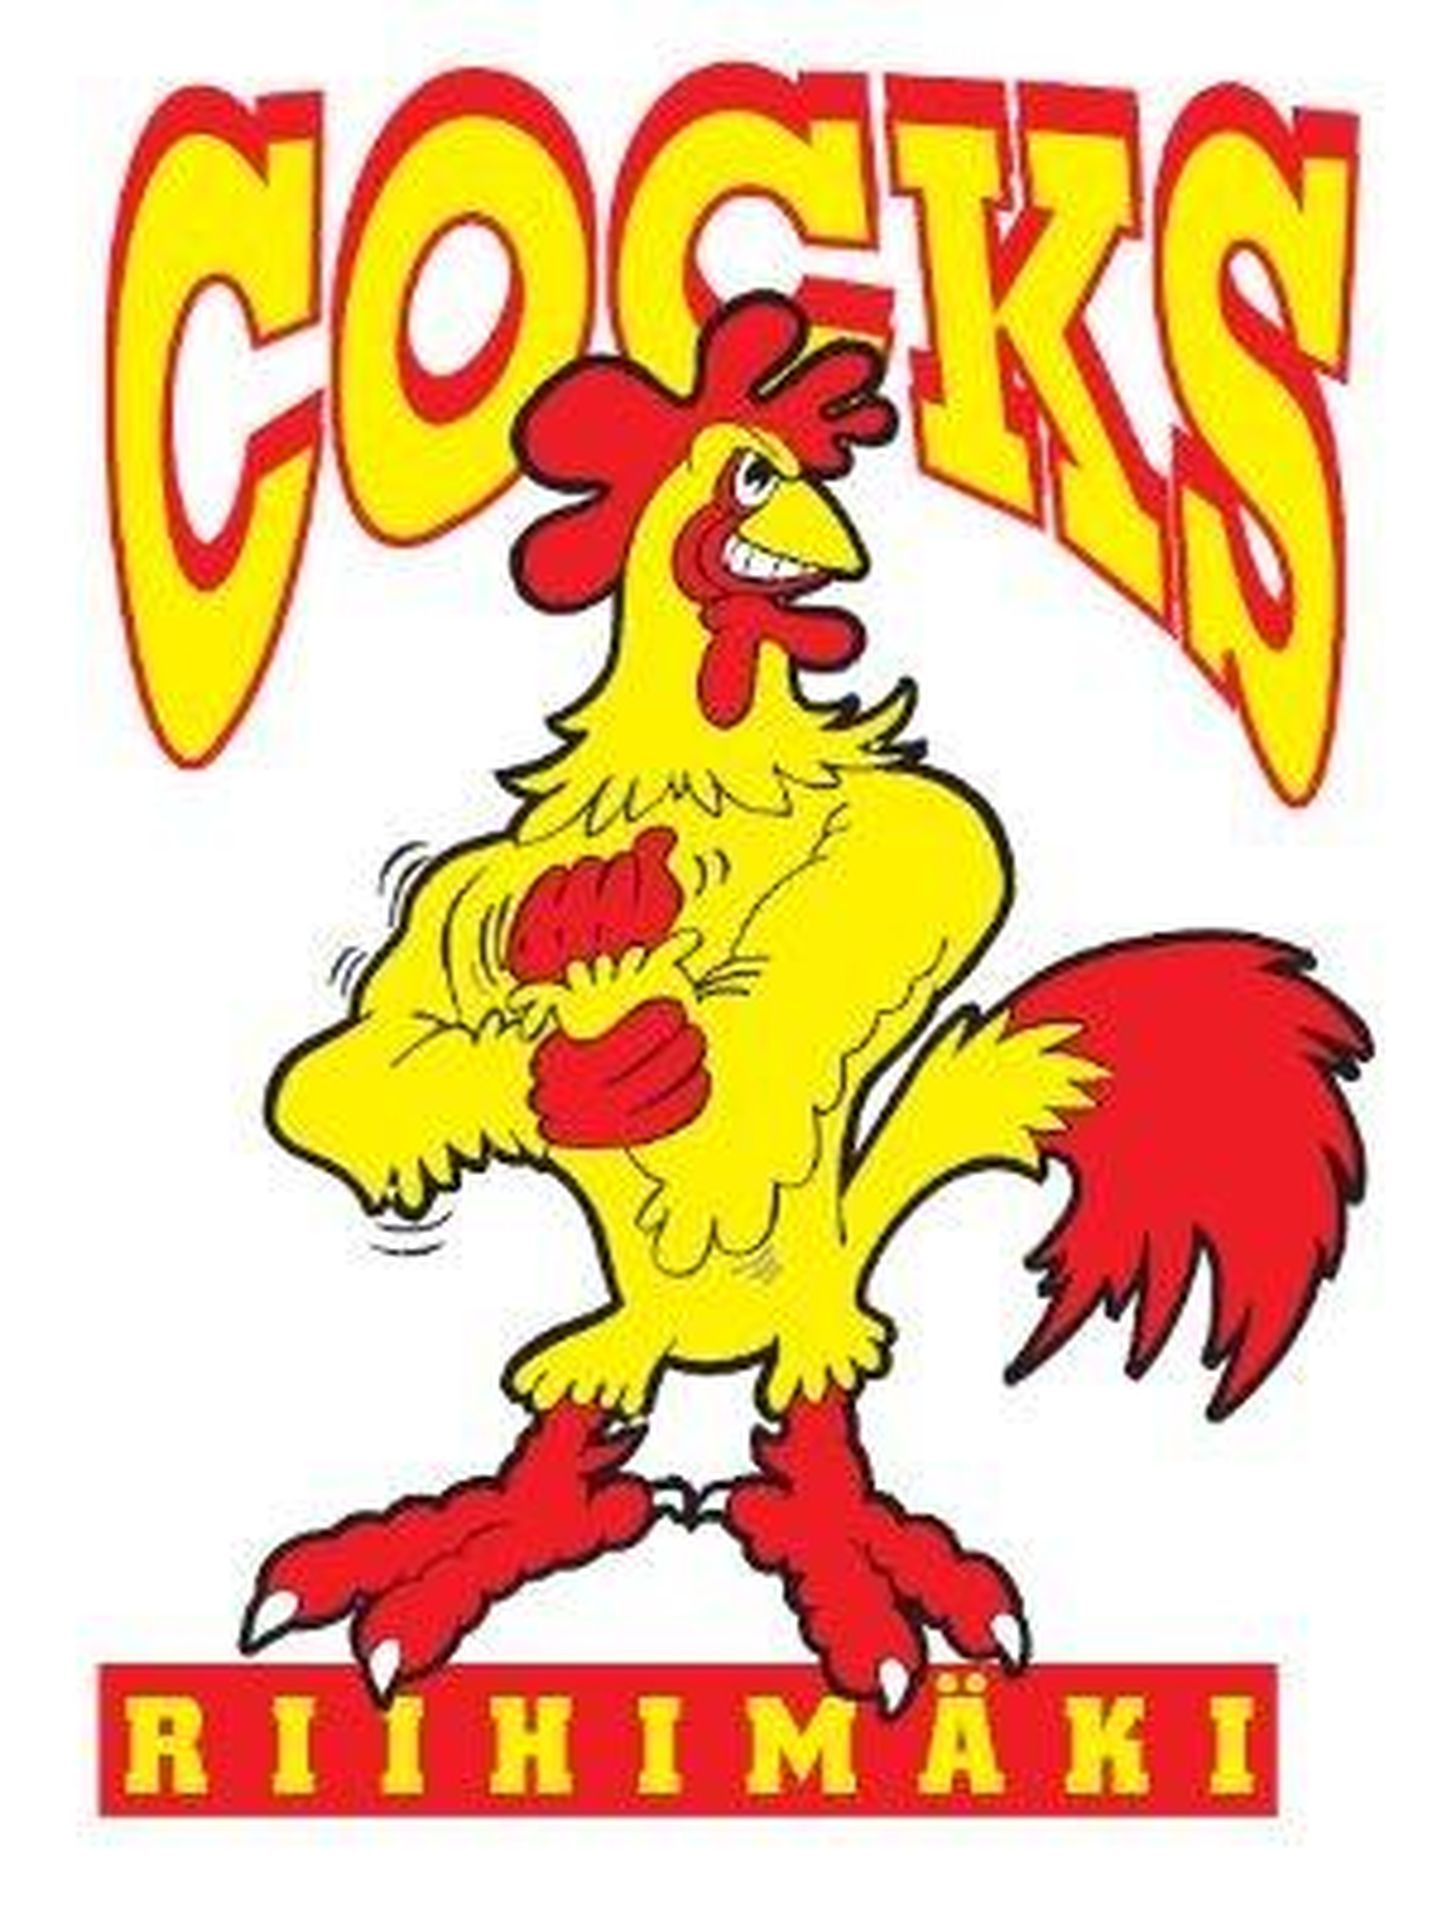 Riihimäe Cocksi logo.